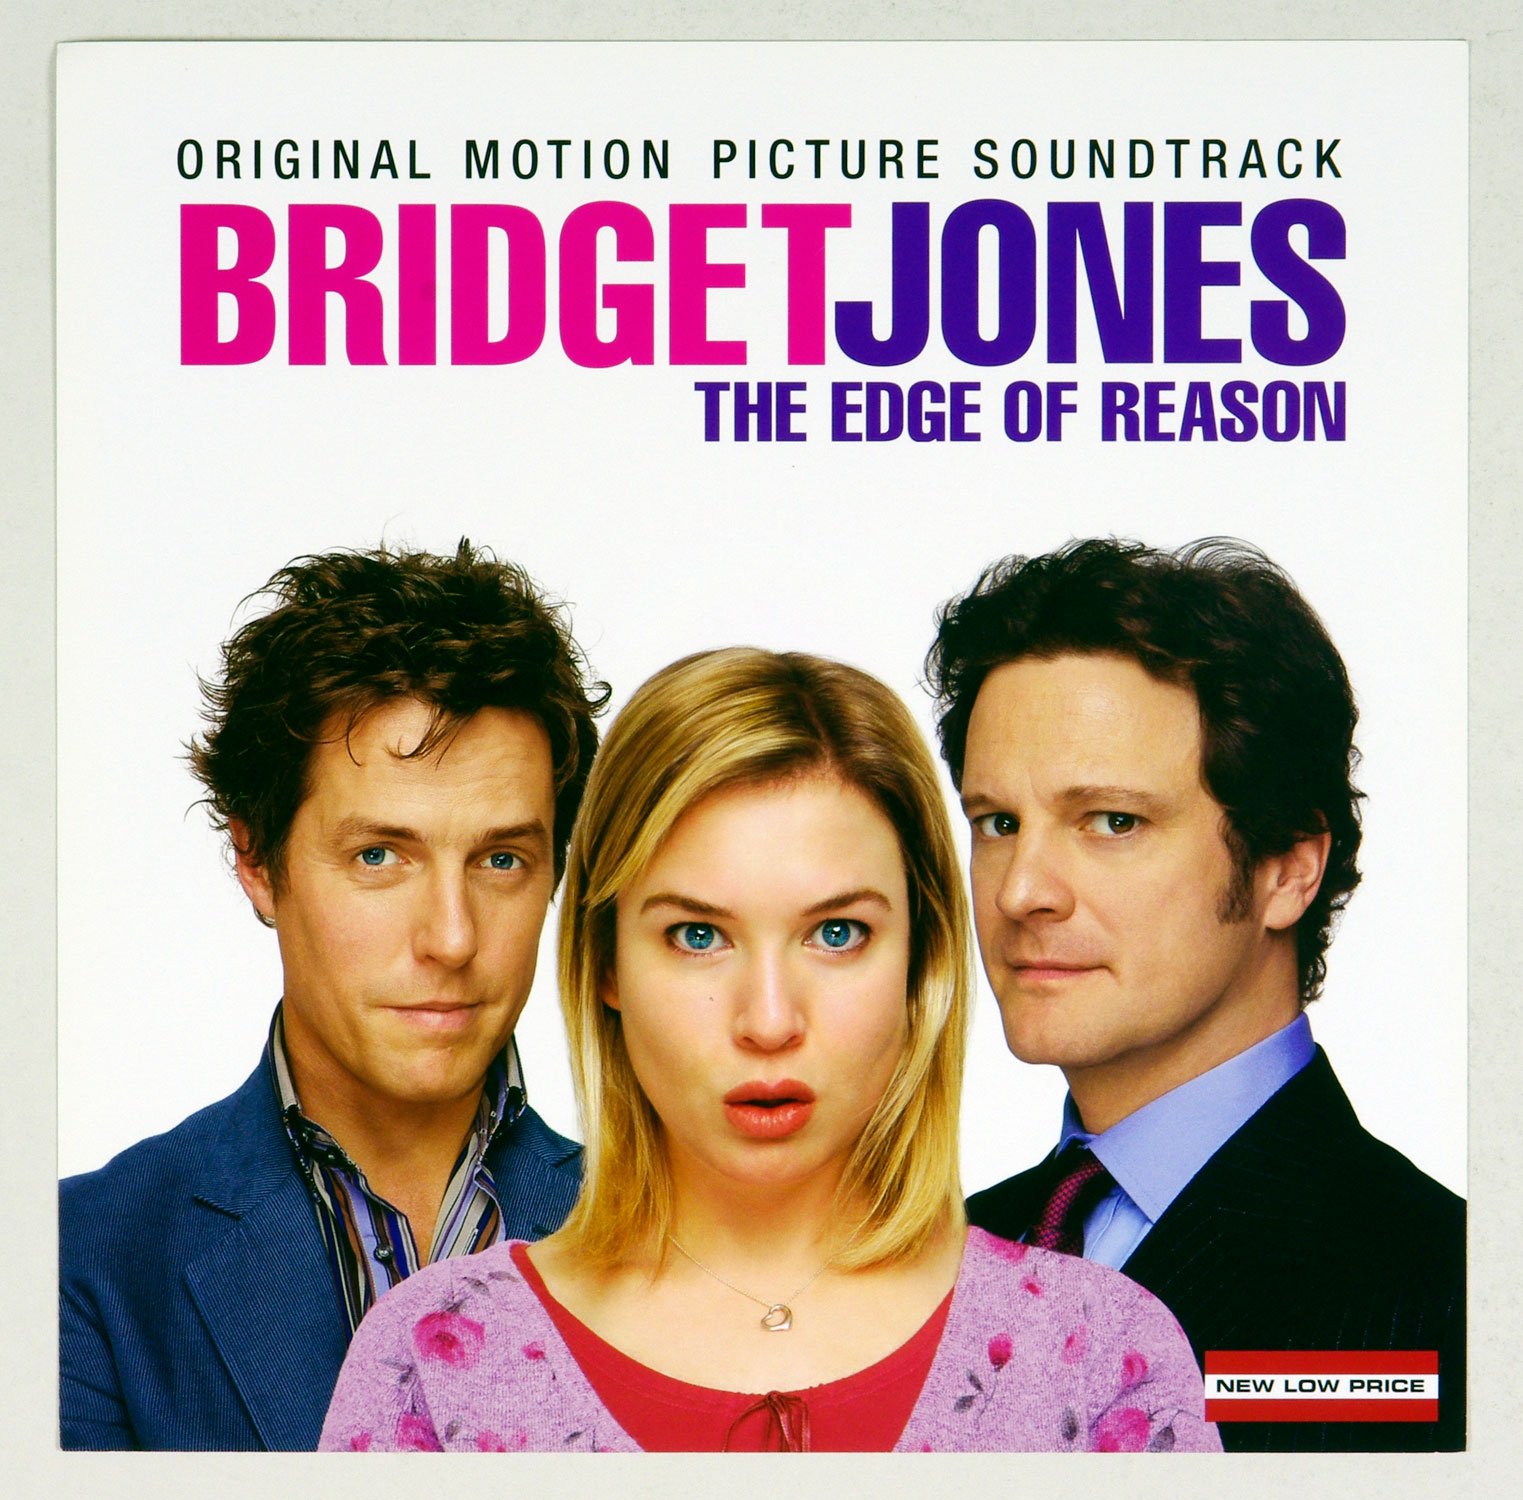 Bridget Jones The Edge of Reason Poster Flat 2004 Original Movie Soundtrack Album Promo 12 x 12 